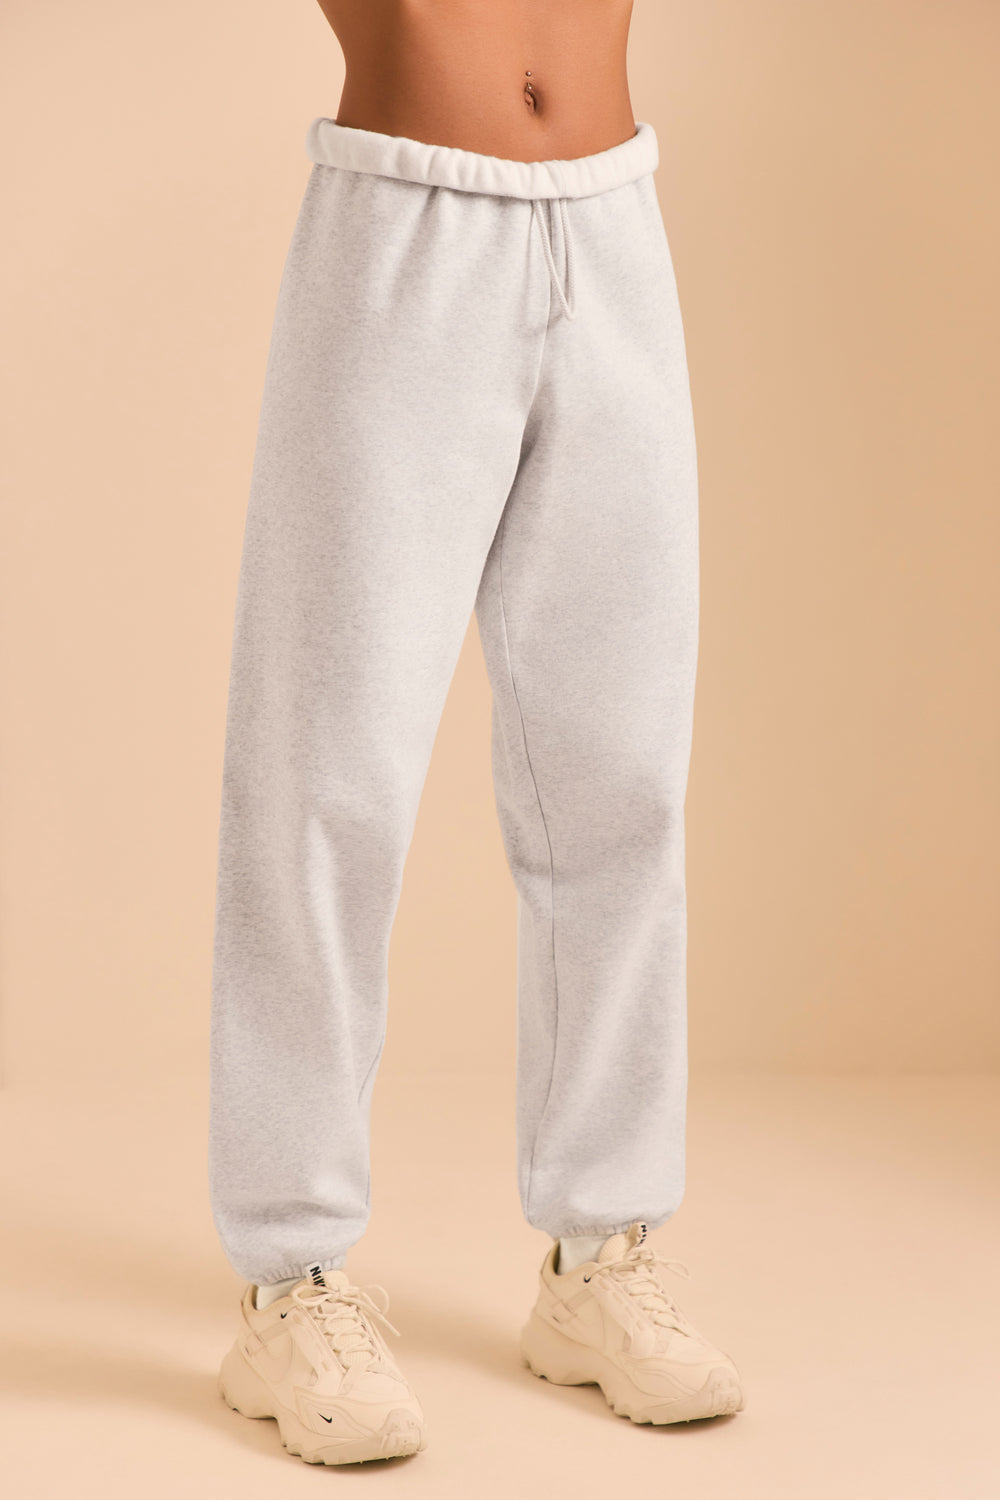 Women's Fleece Relax Fit Cropped Jogger Lounge Sweatpants Running Pants ( Fleece Heather Grey, Large) 